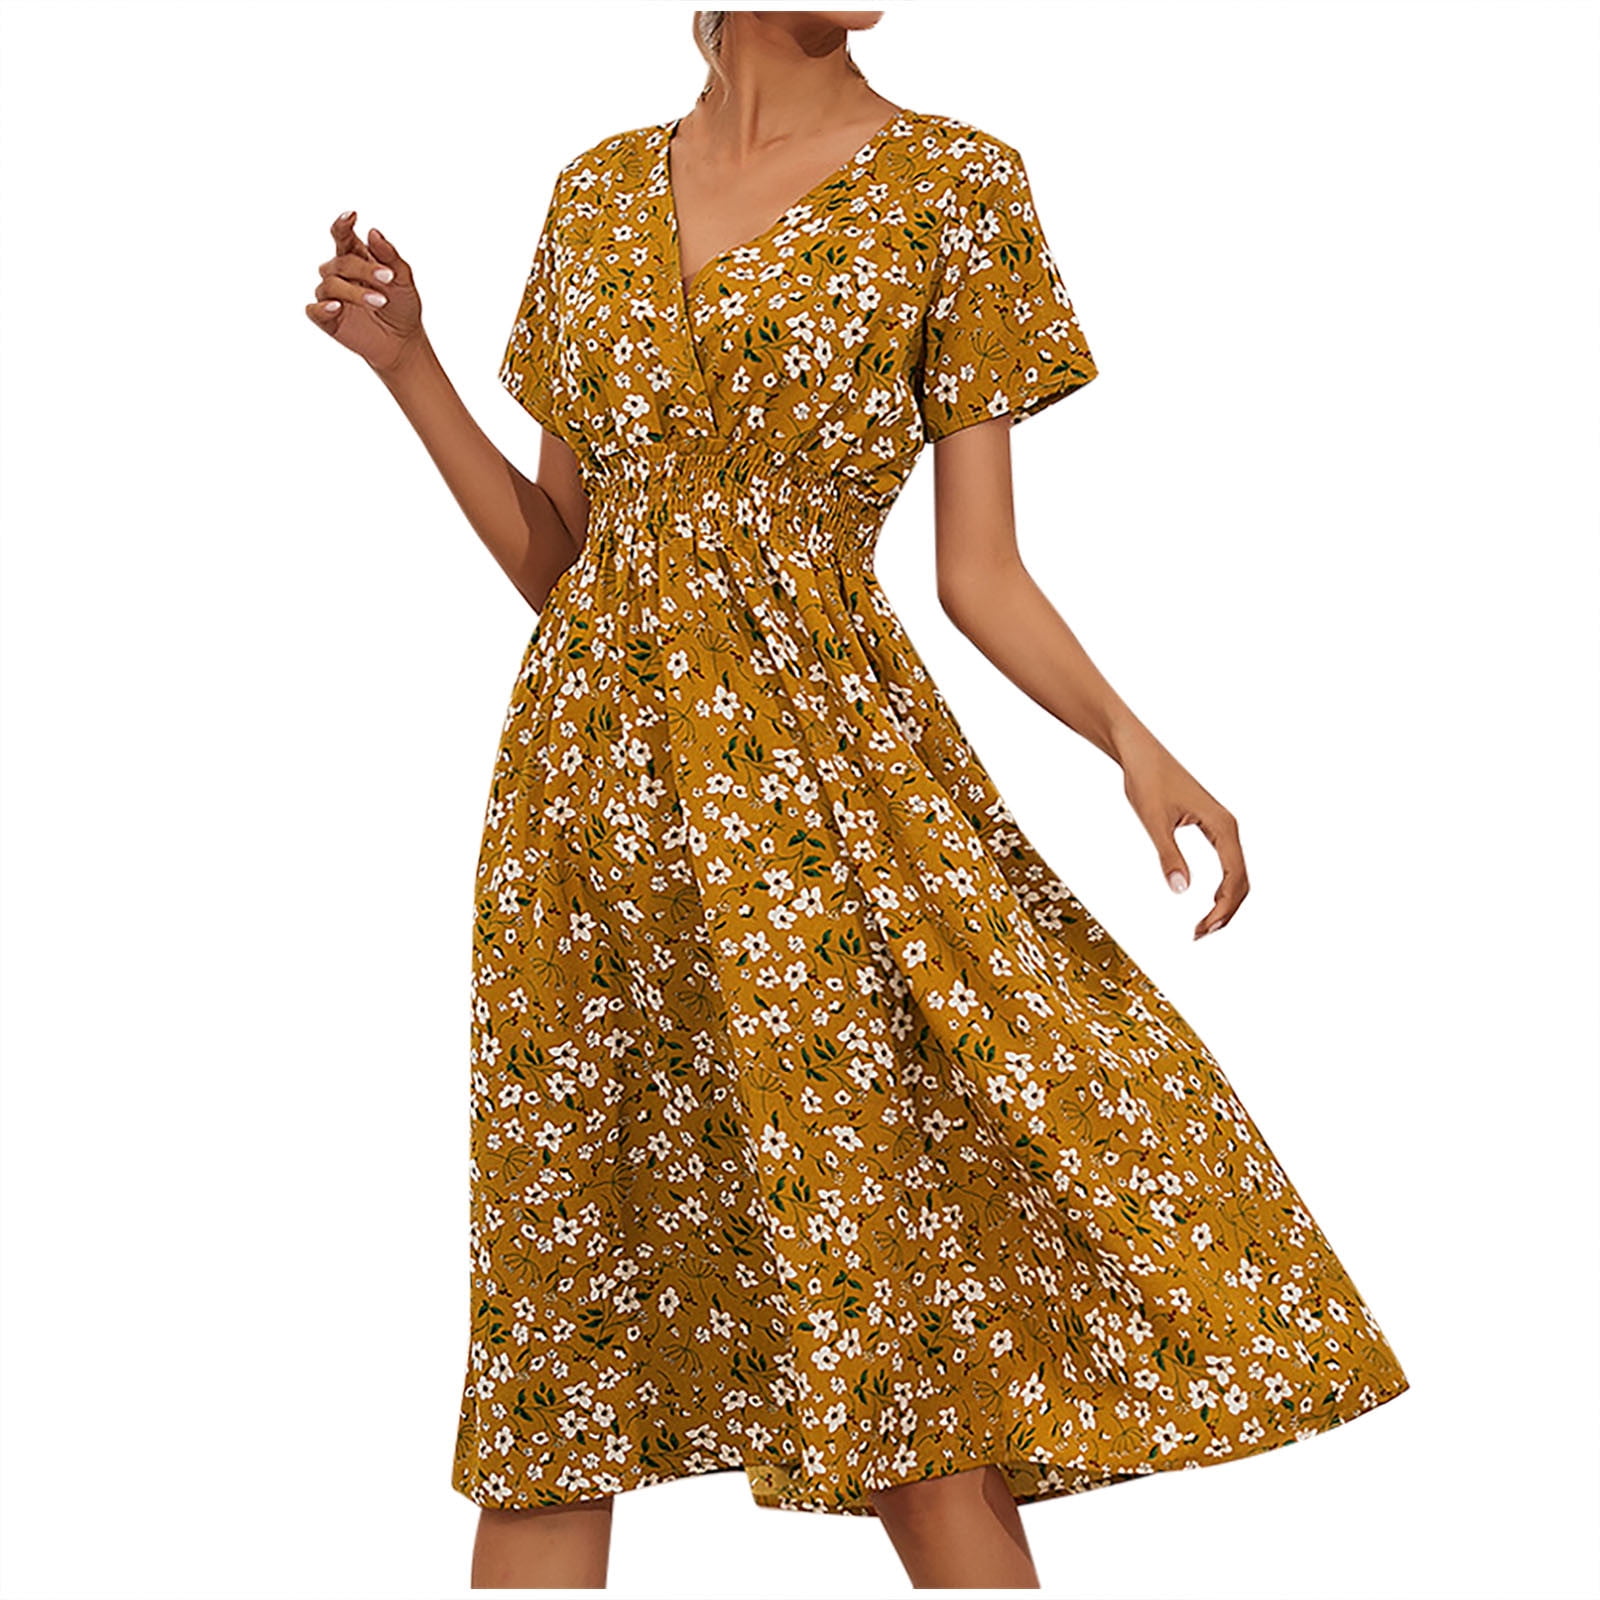 Puntoco Sun dresses for women Clearance,Women Summer Short Sleeve V ...